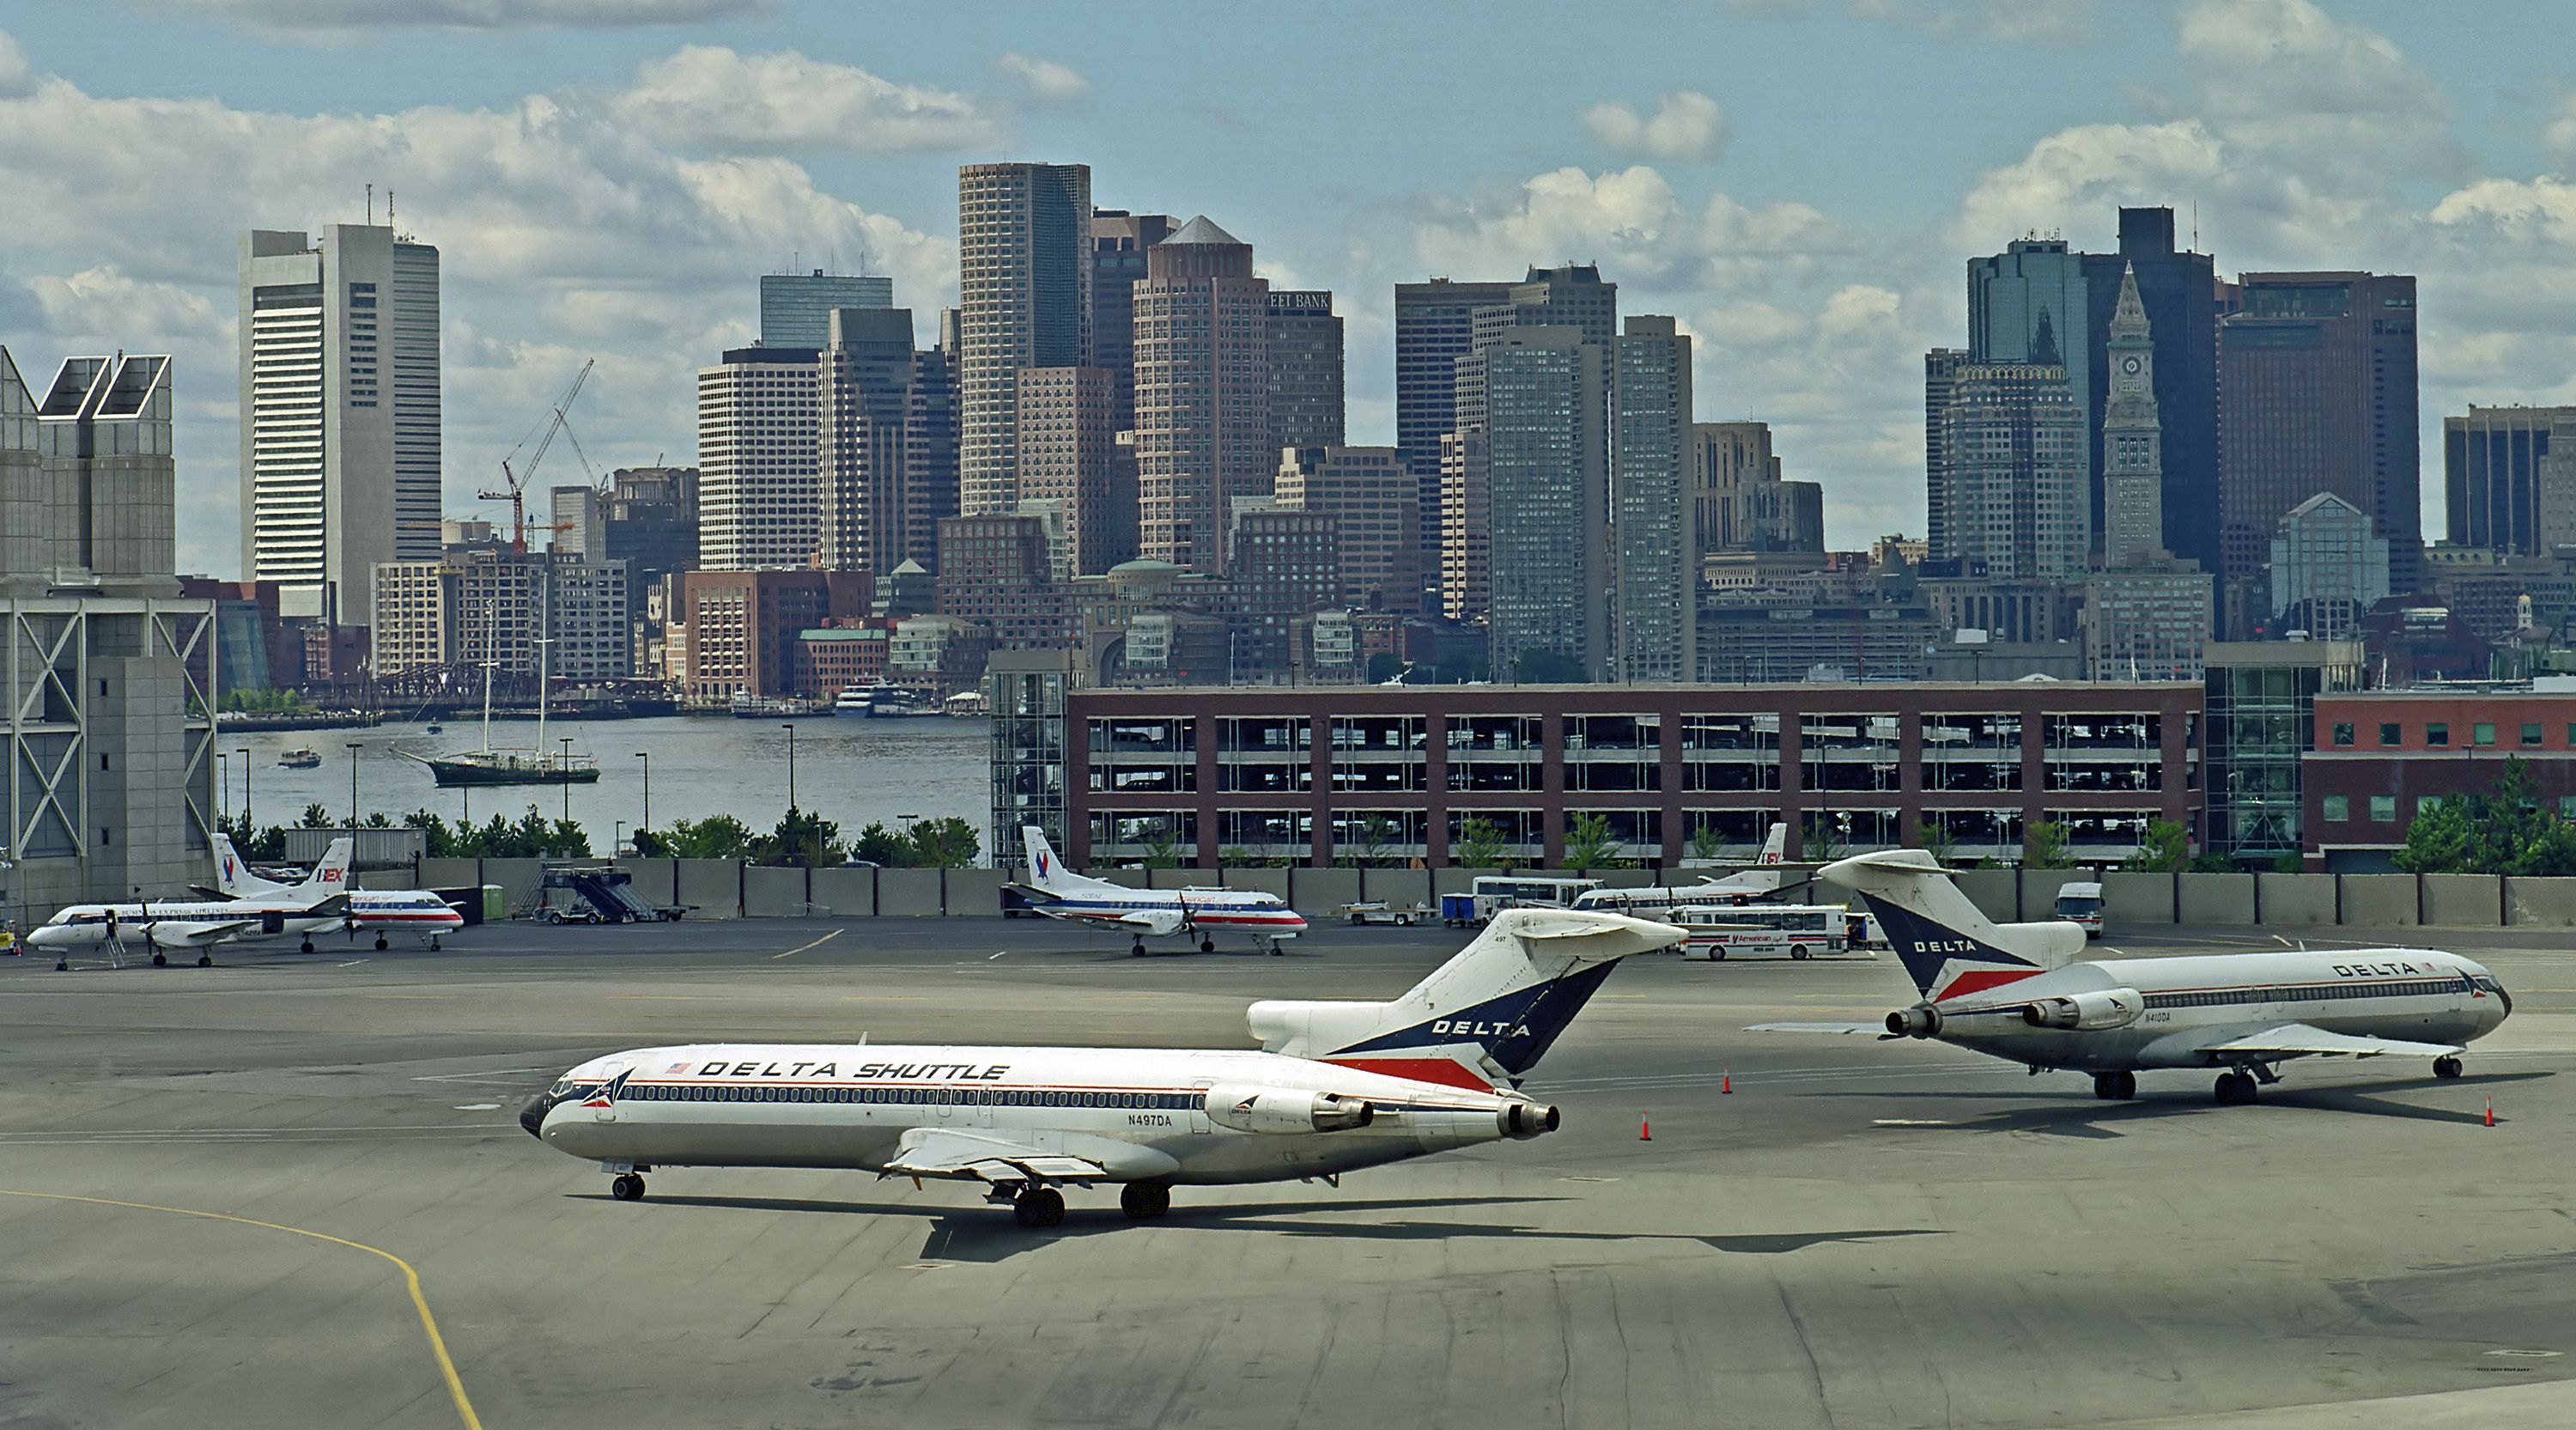 Several Delta Air Lines Boeing 727 aircraft parked at Boston Logan International Airport.